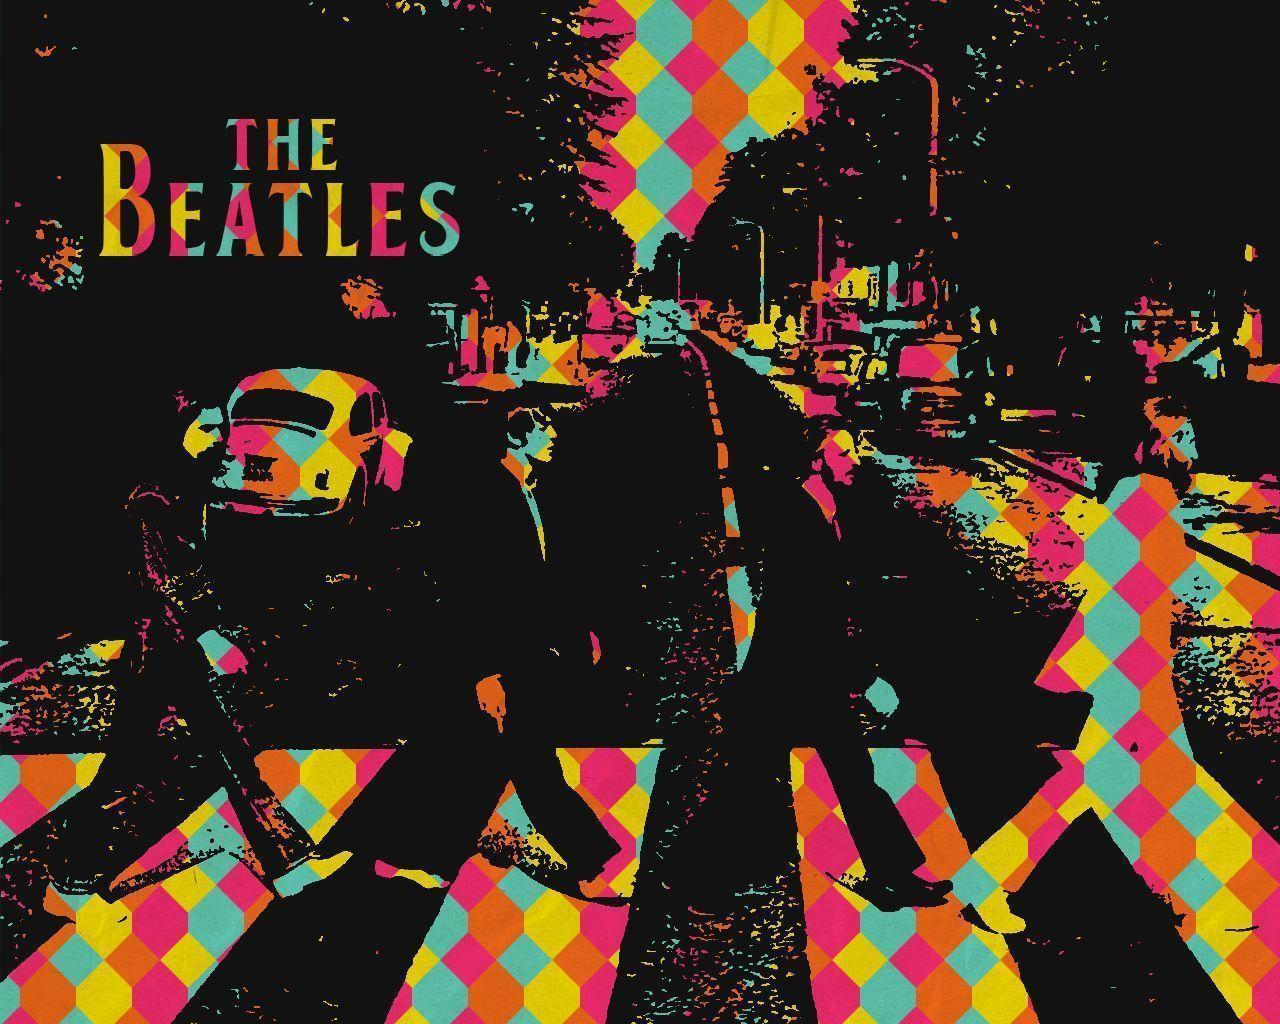 The Beatles desktop wallpaper. The Beatles wallpaper